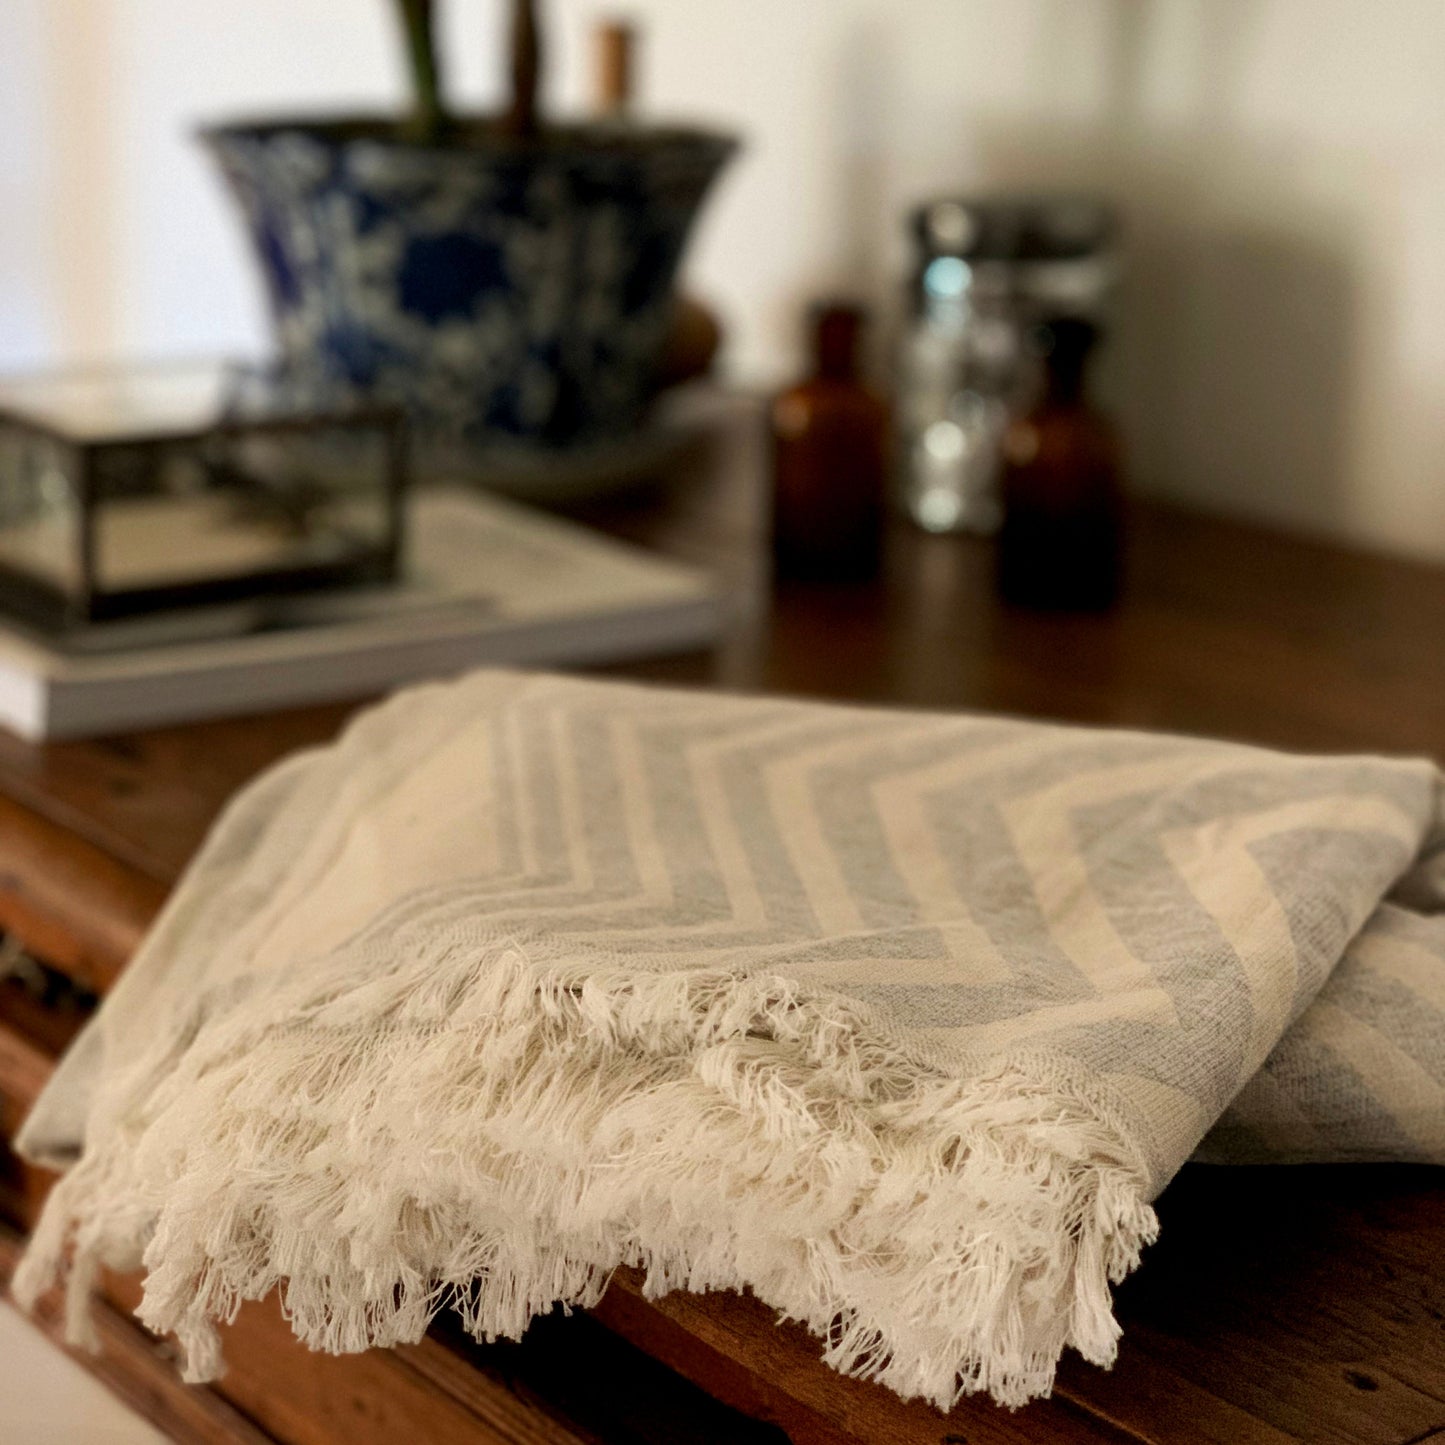 
                  
                    Mersin Chevron Turkish Towel / Blanket - Gray by Hilana Upcycled Cotton
                  
                